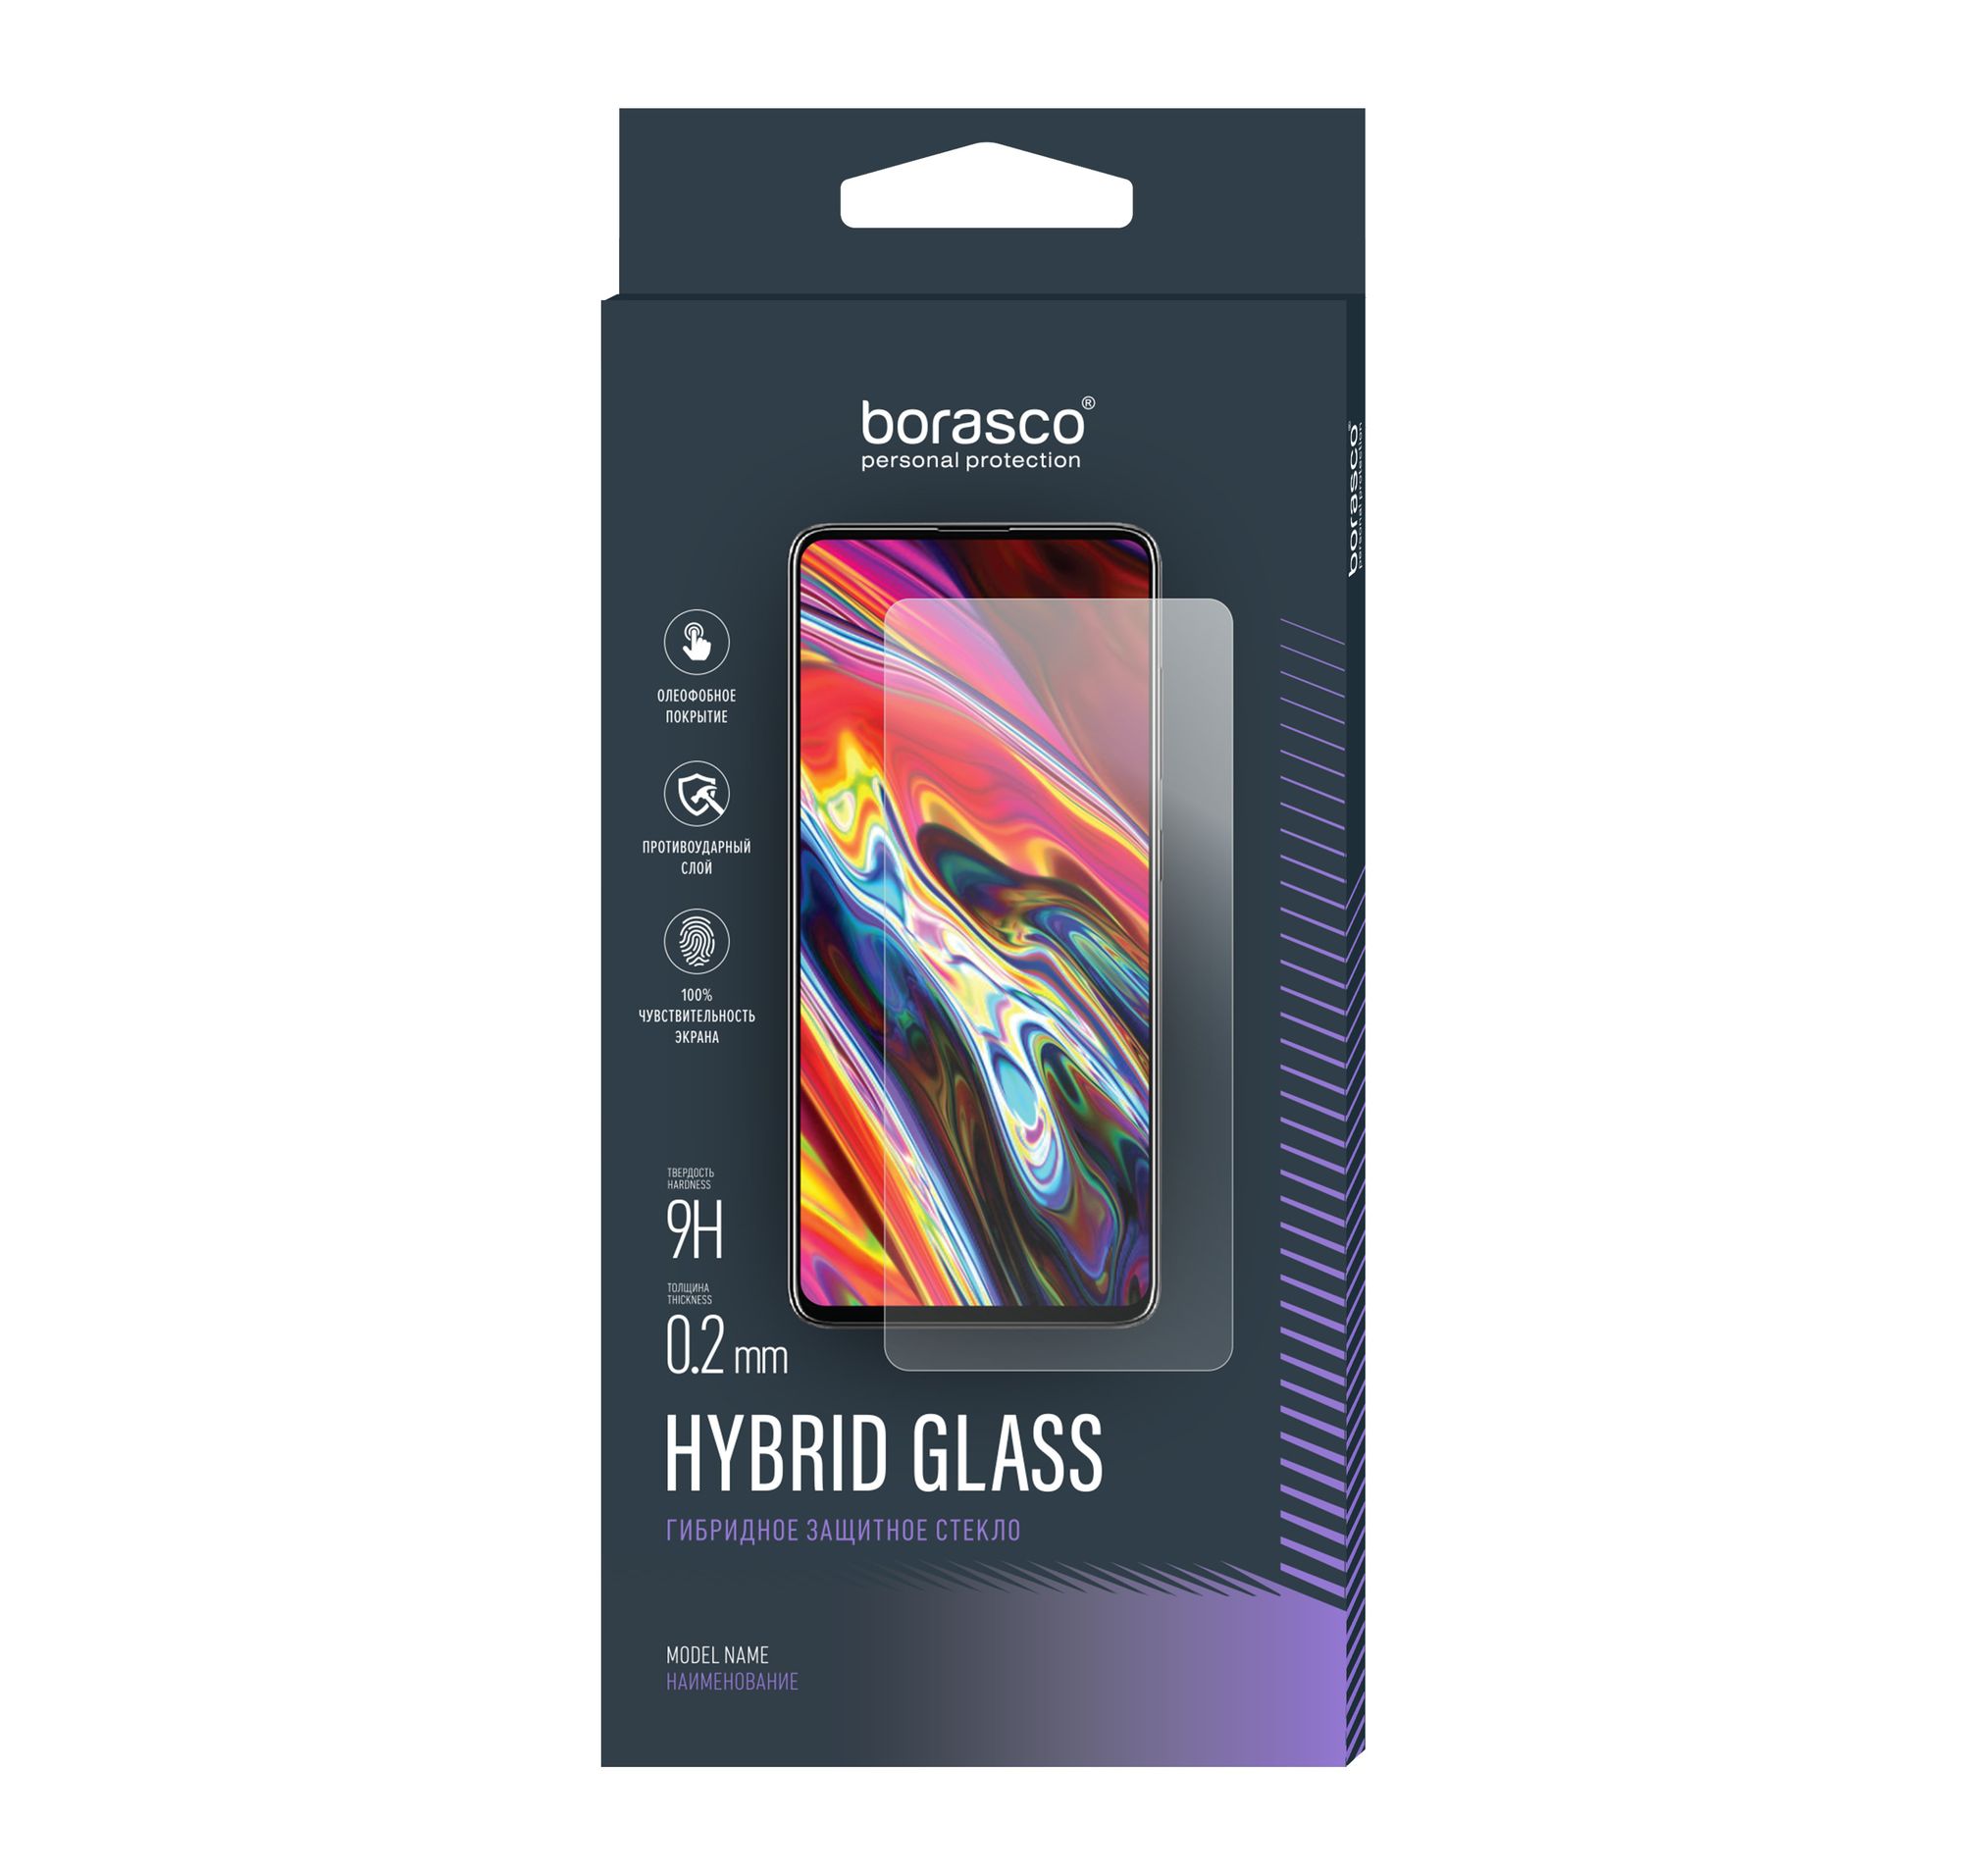 Стекло защитное Hybrid Glass VSP 0,26 мм для Huawei Y7 2018/ Honor 7C Pro неполноэкранное защитное стекло для huawei honor 7a pro 7c y6 prime 2018